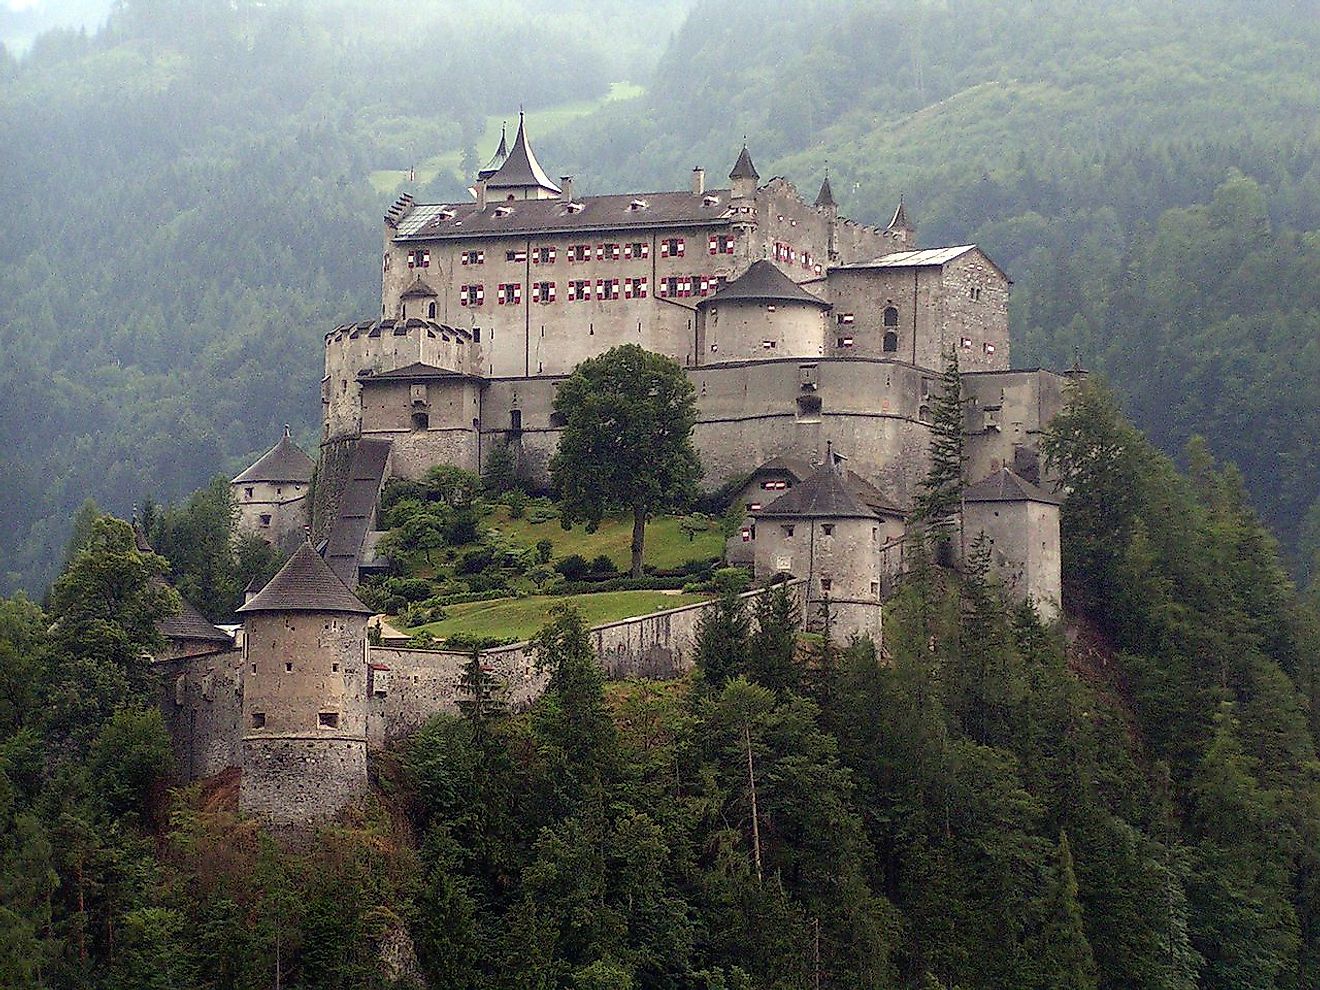 Hohenwerfen Fortress. Image credit: Memorator/Wikimedia.org